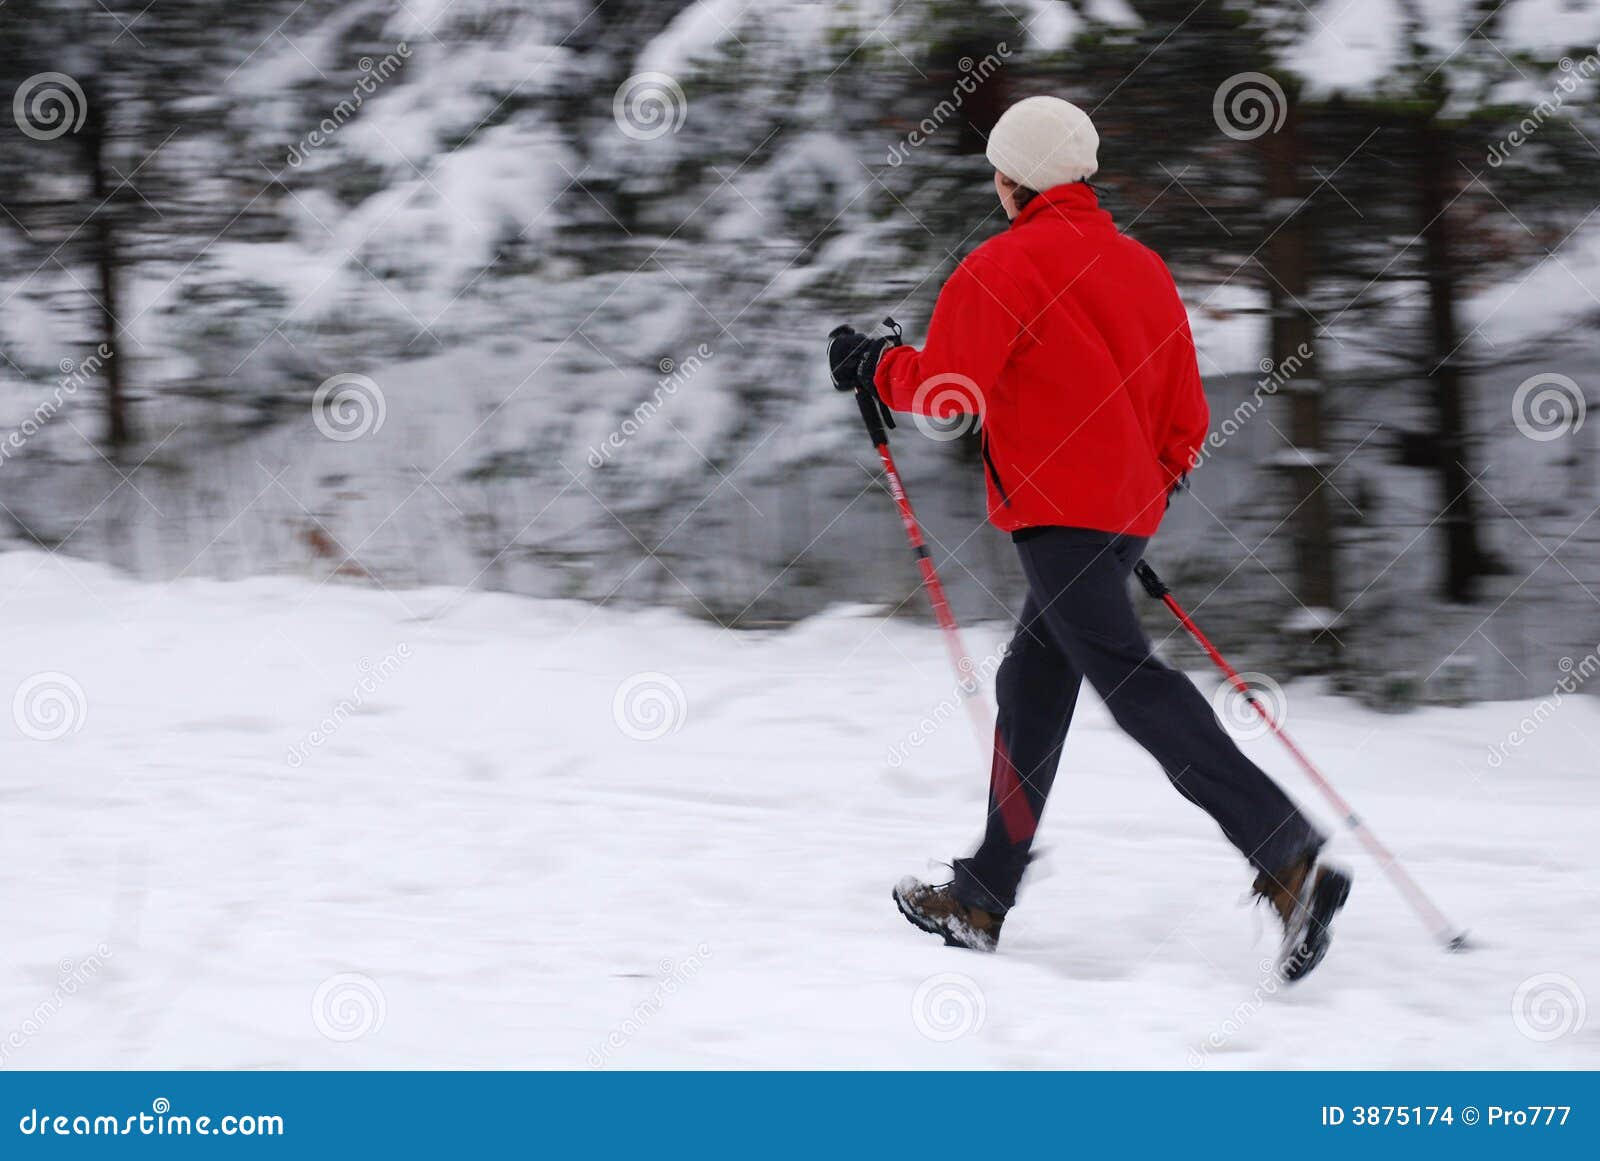 Nordic walking stock photo. Image of jogger, fitness, hobby - 3875174